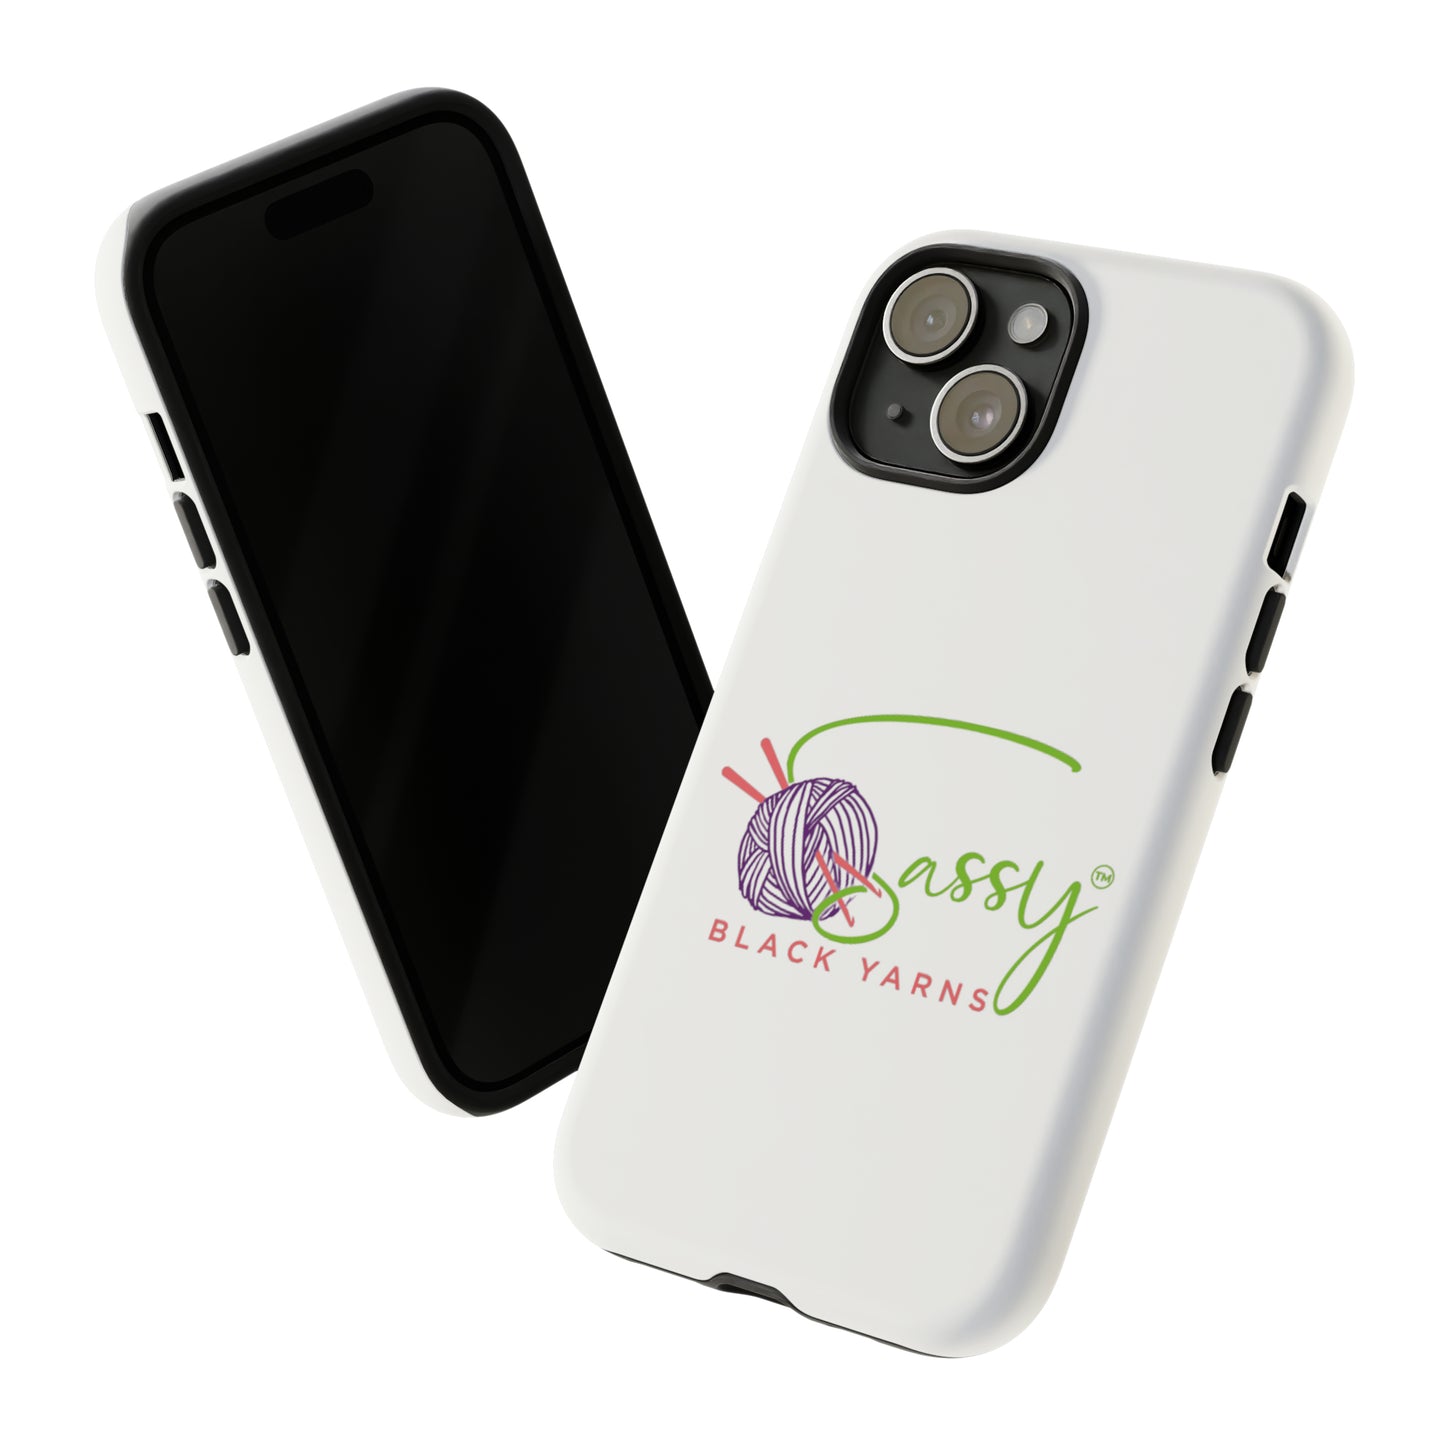 Sassy Black Yarns - Tough Phone Cases